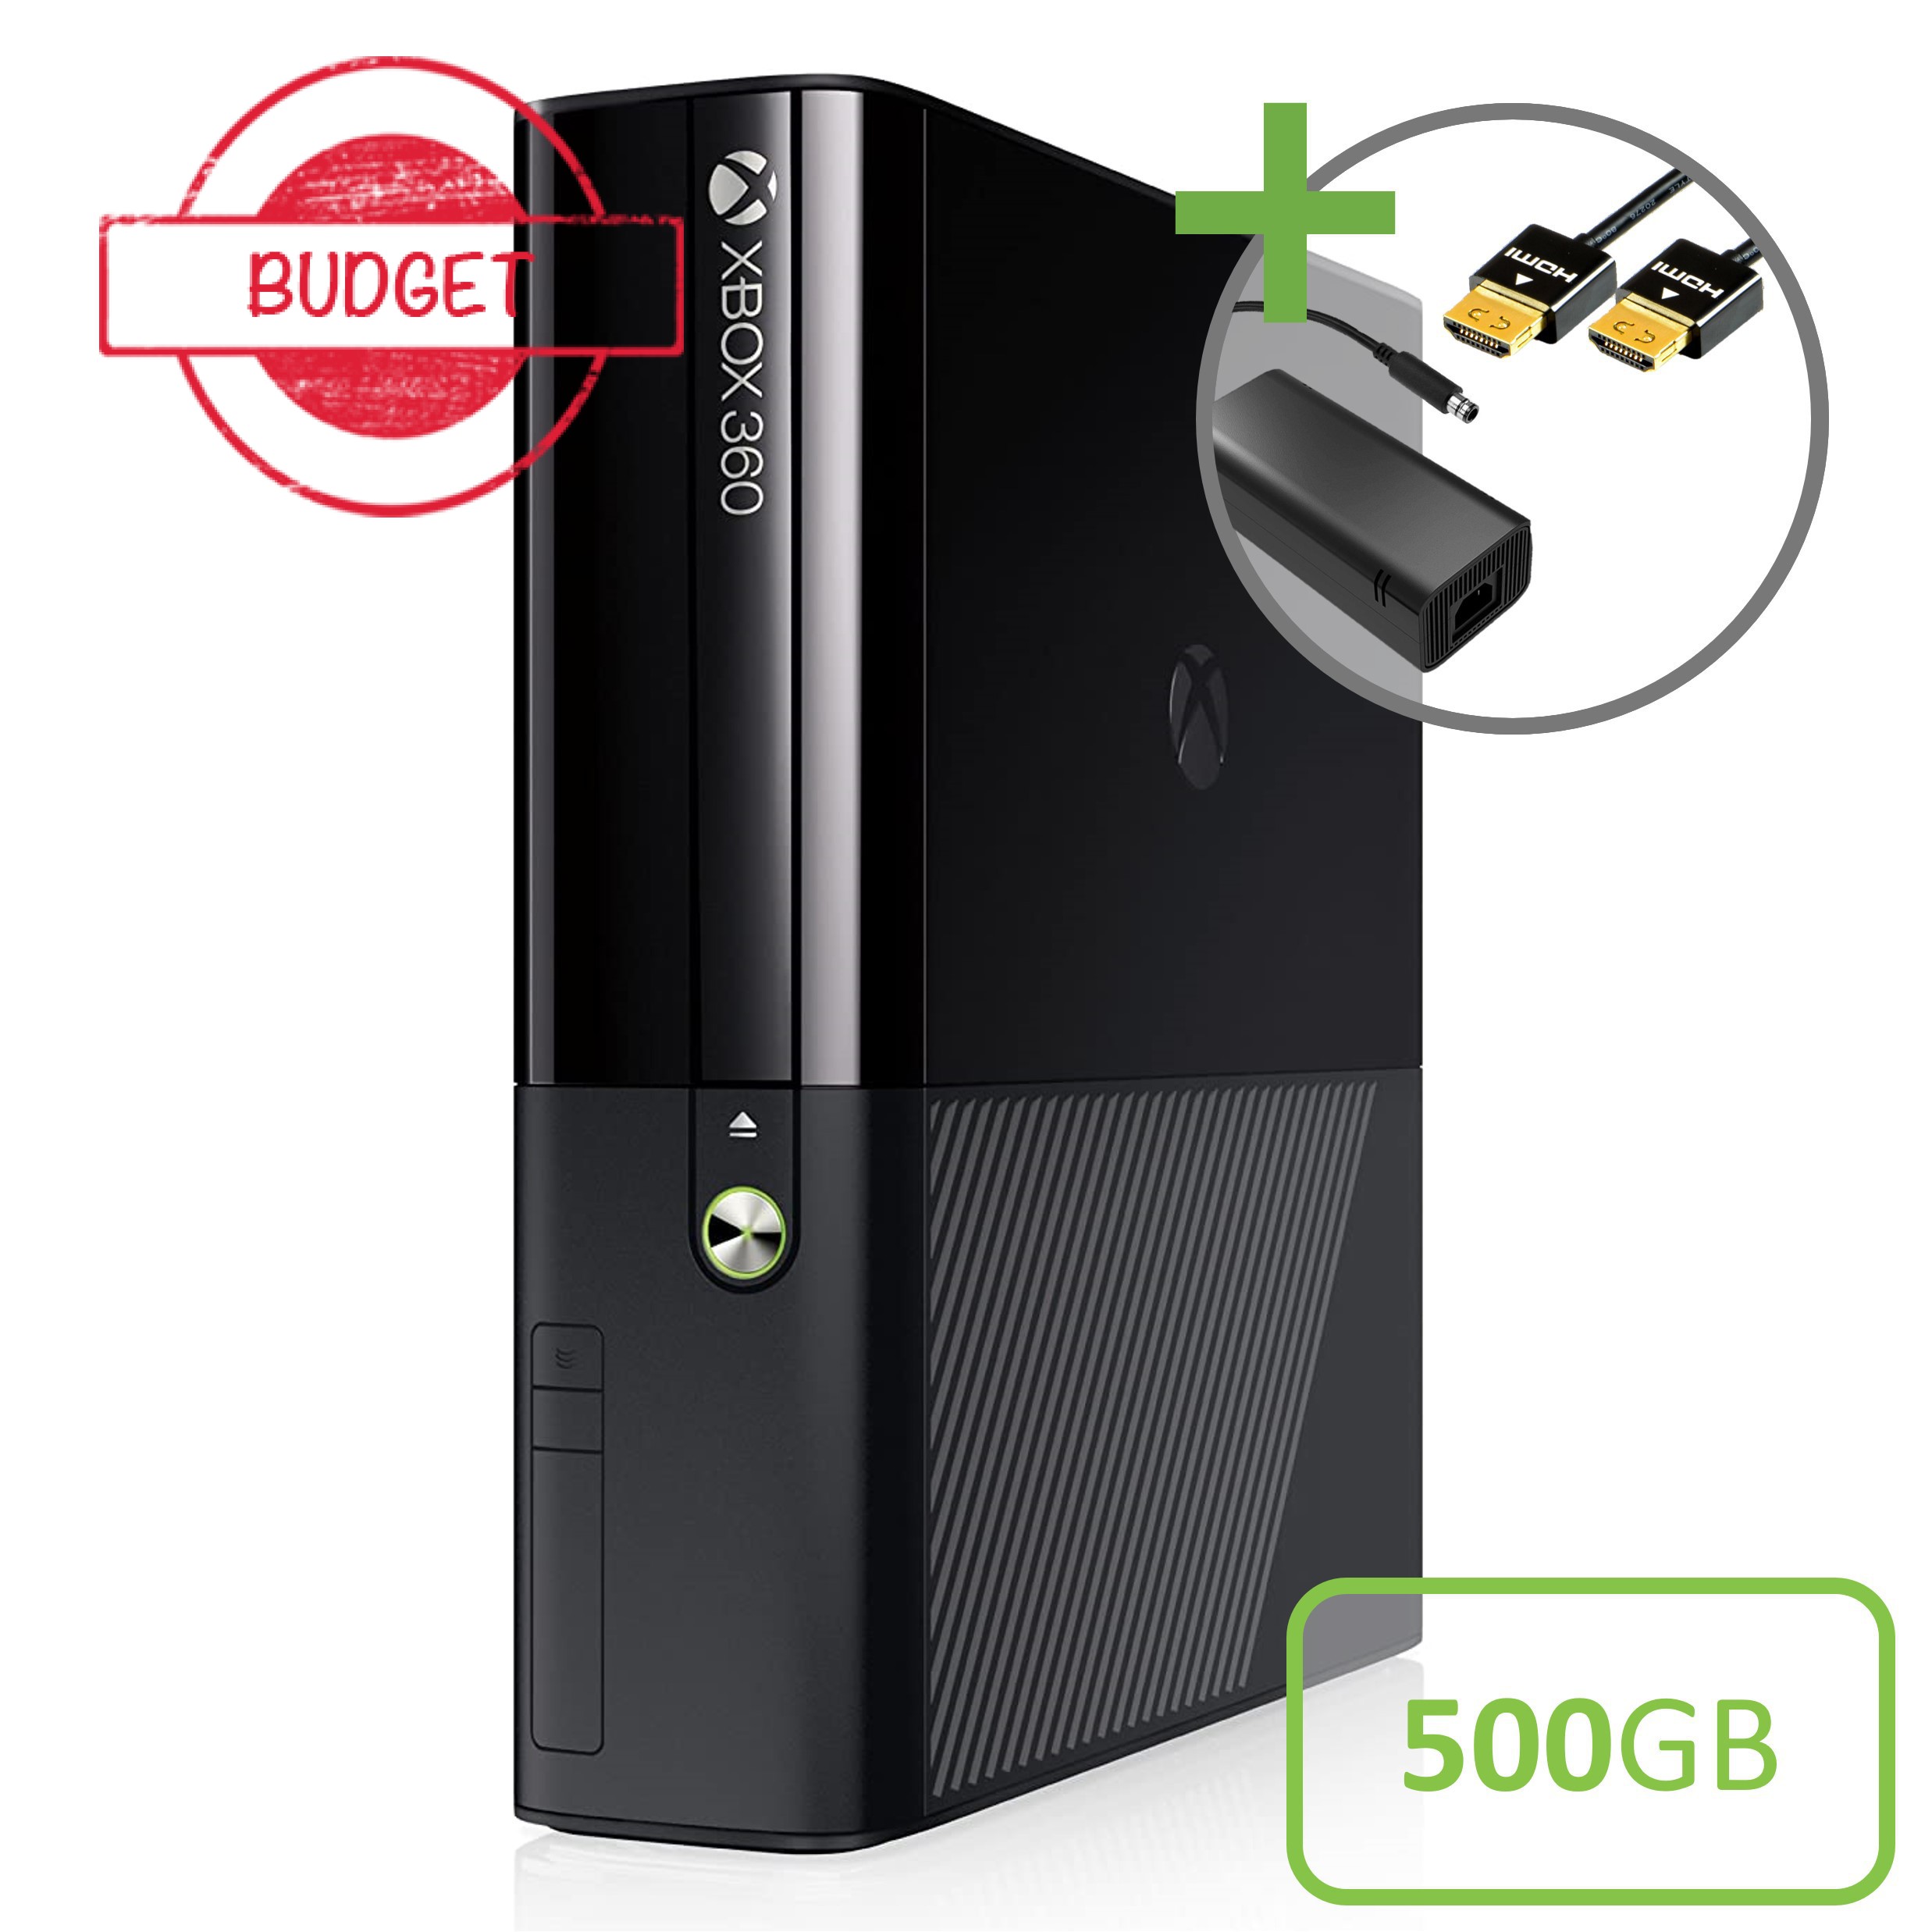 Microsoft Xbox 360 New Slim Console (500GB) - Budget Kopen | Xbox 360 Hardware